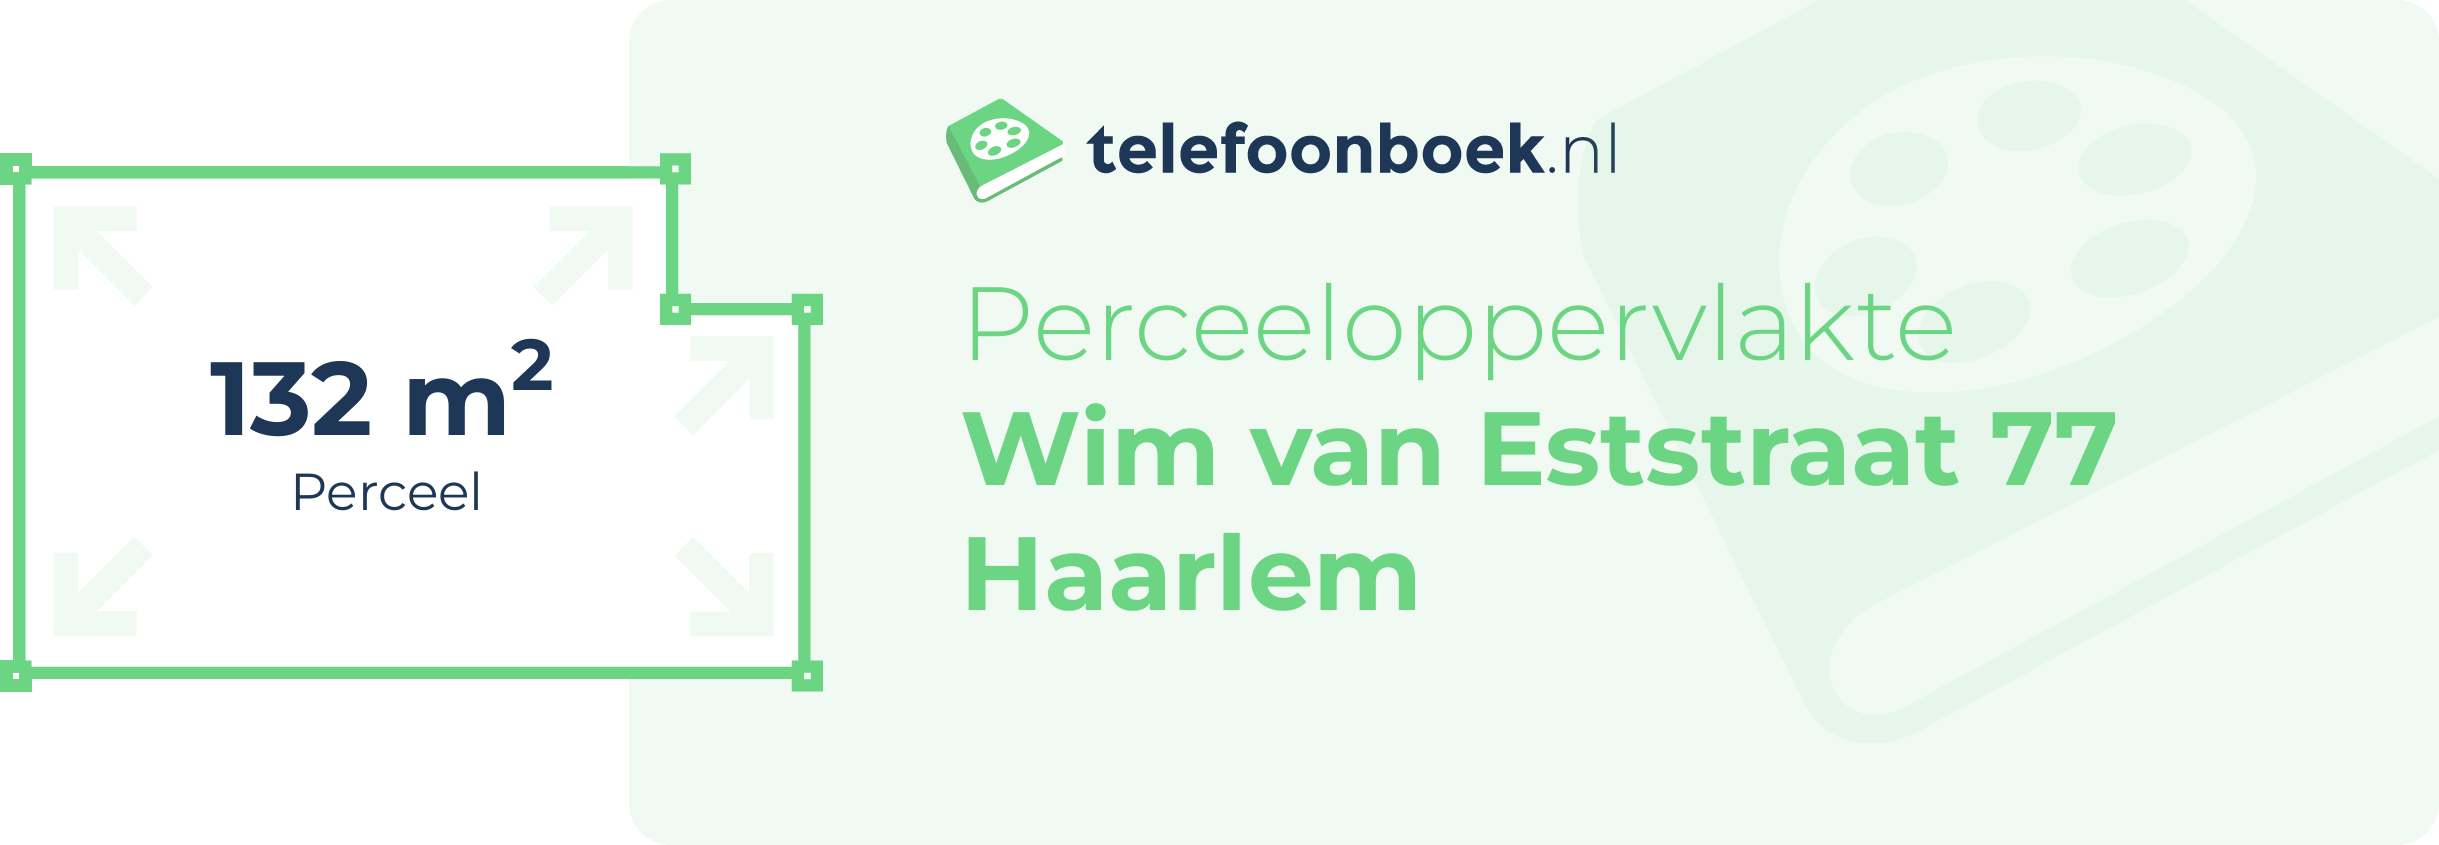 Perceeloppervlakte Wim Van Eststraat 77 Haarlem